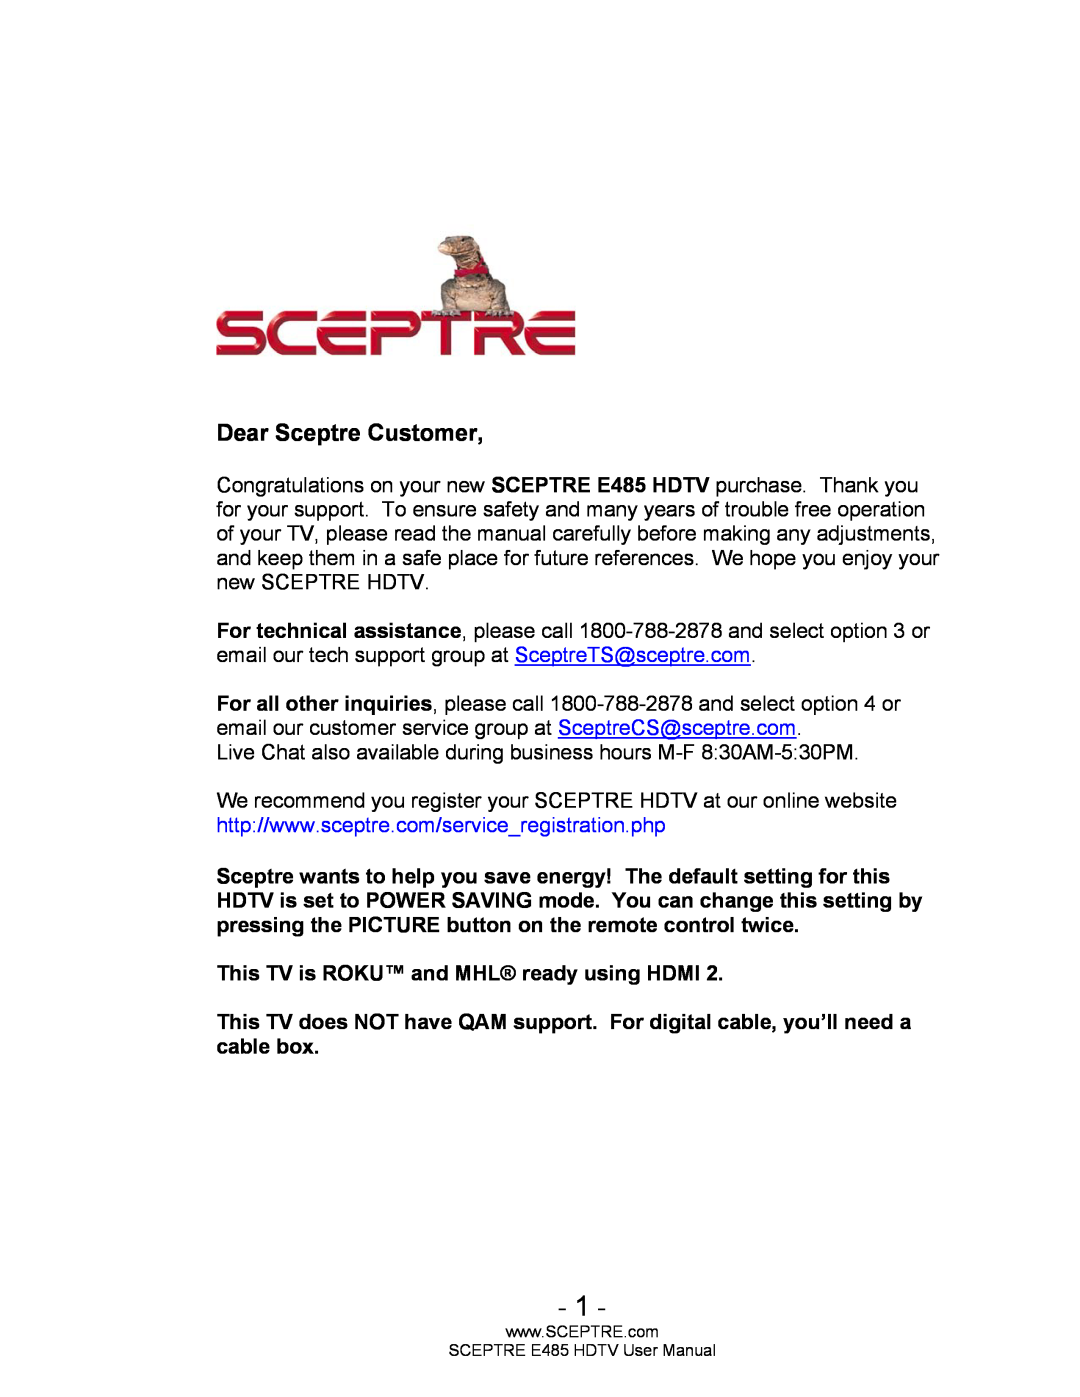 Sceptre Technologies E485 user manual Dear Sceptre Customer 